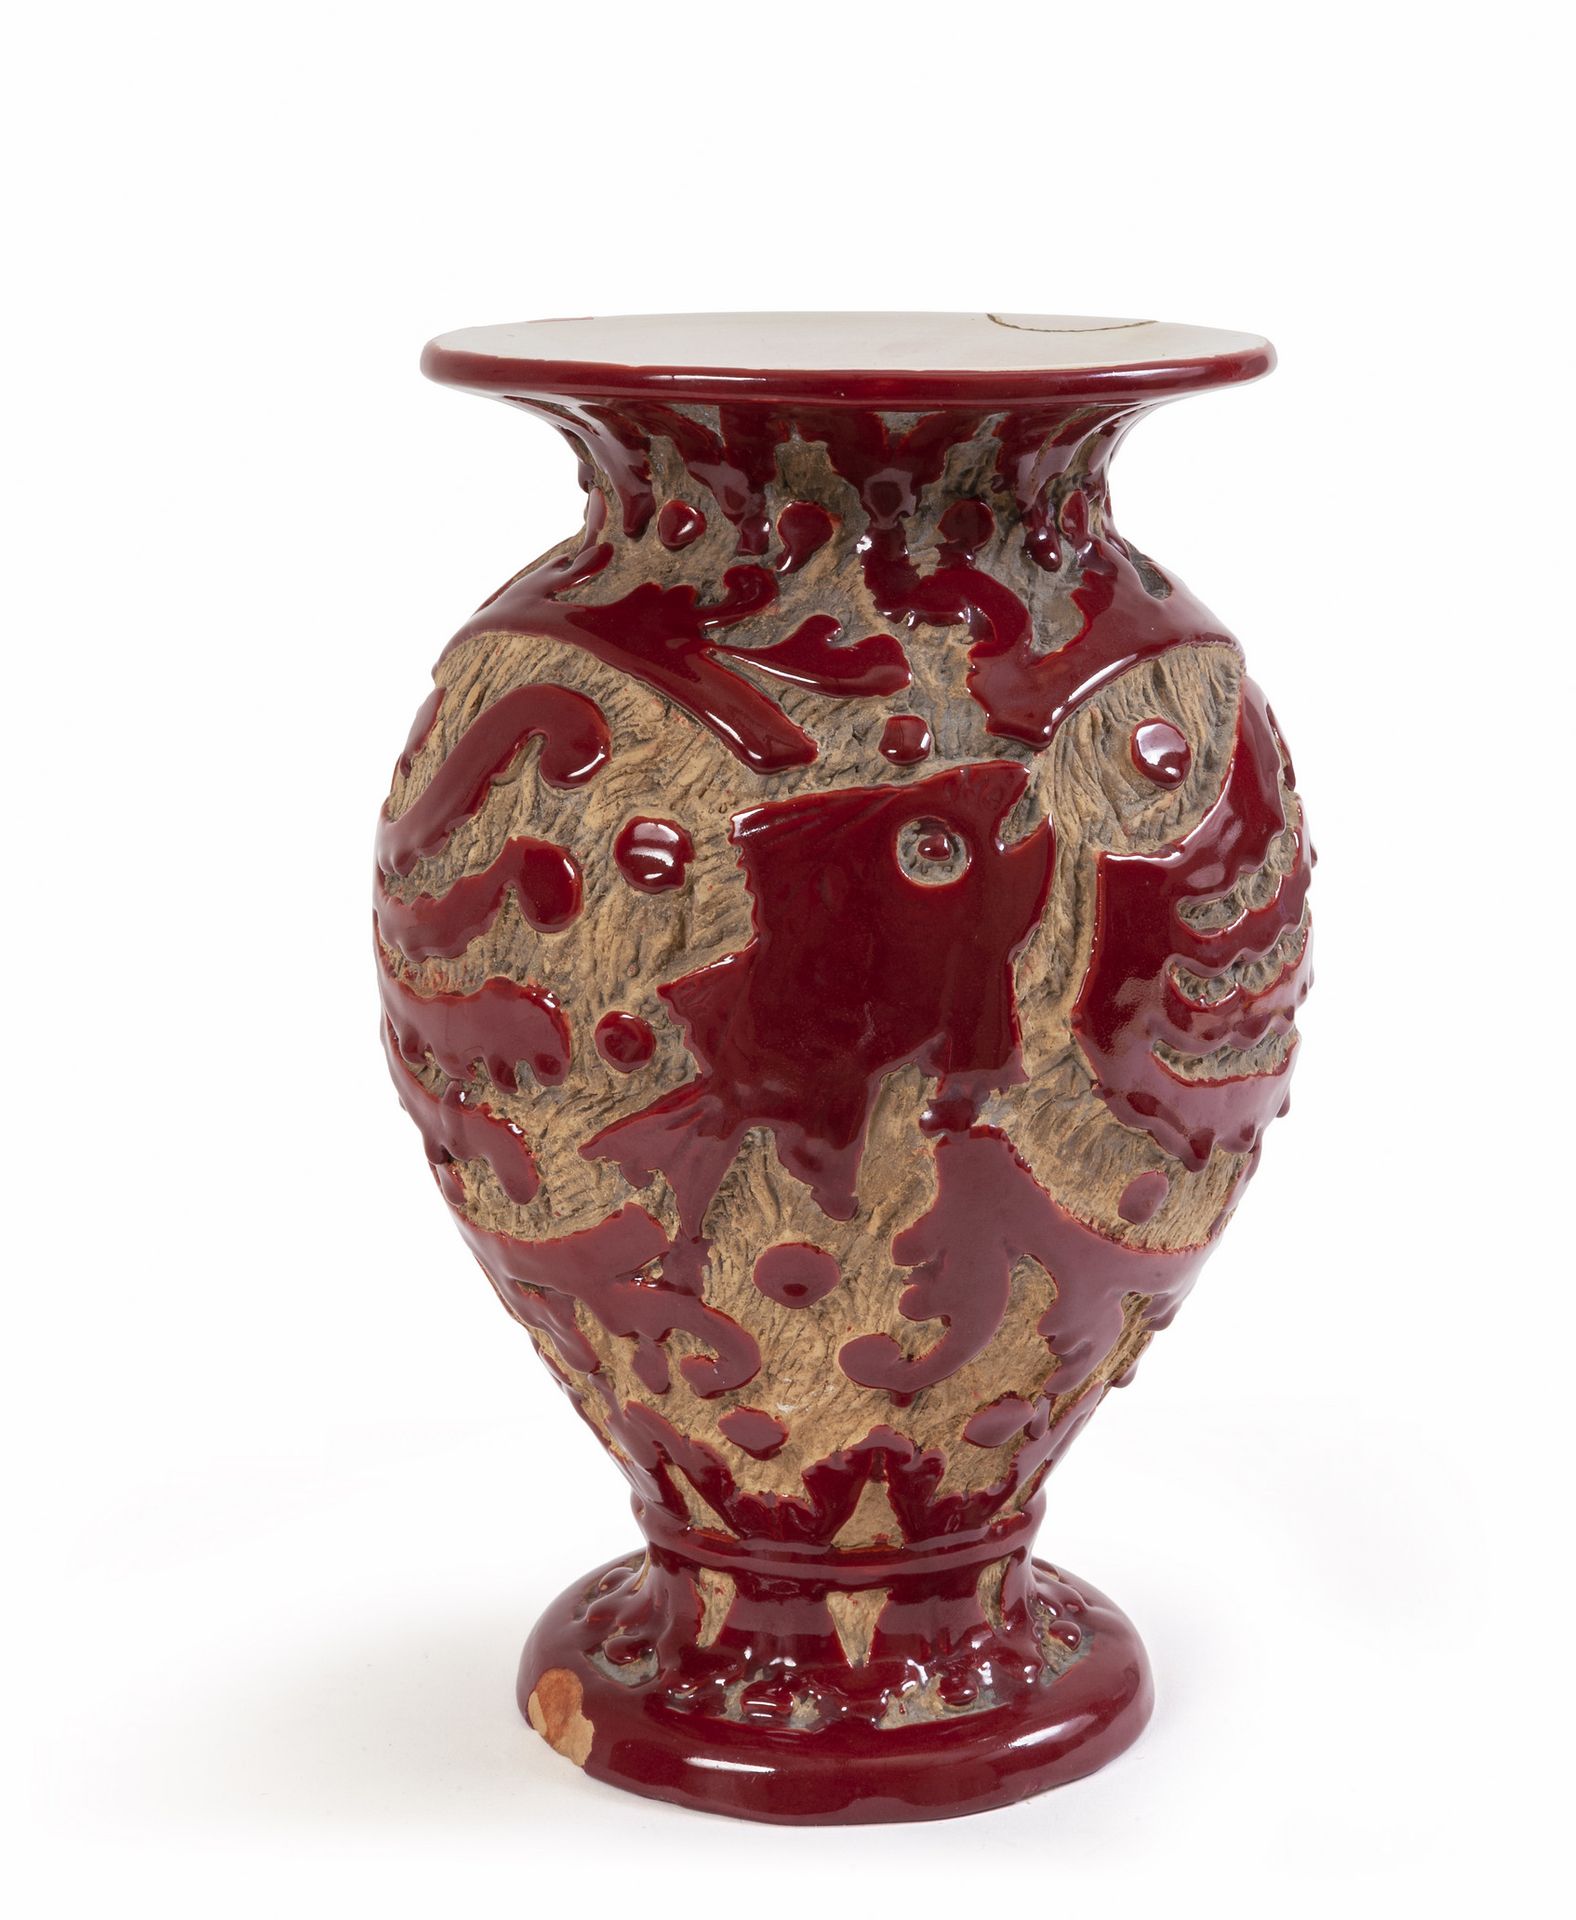 FANTECHI FANTECHI
20世纪30年代的浮雕陶瓷花瓶。
标有 "5032 FANTECHI"。
底部和口部有缺陷。
高度为28 5厘米。